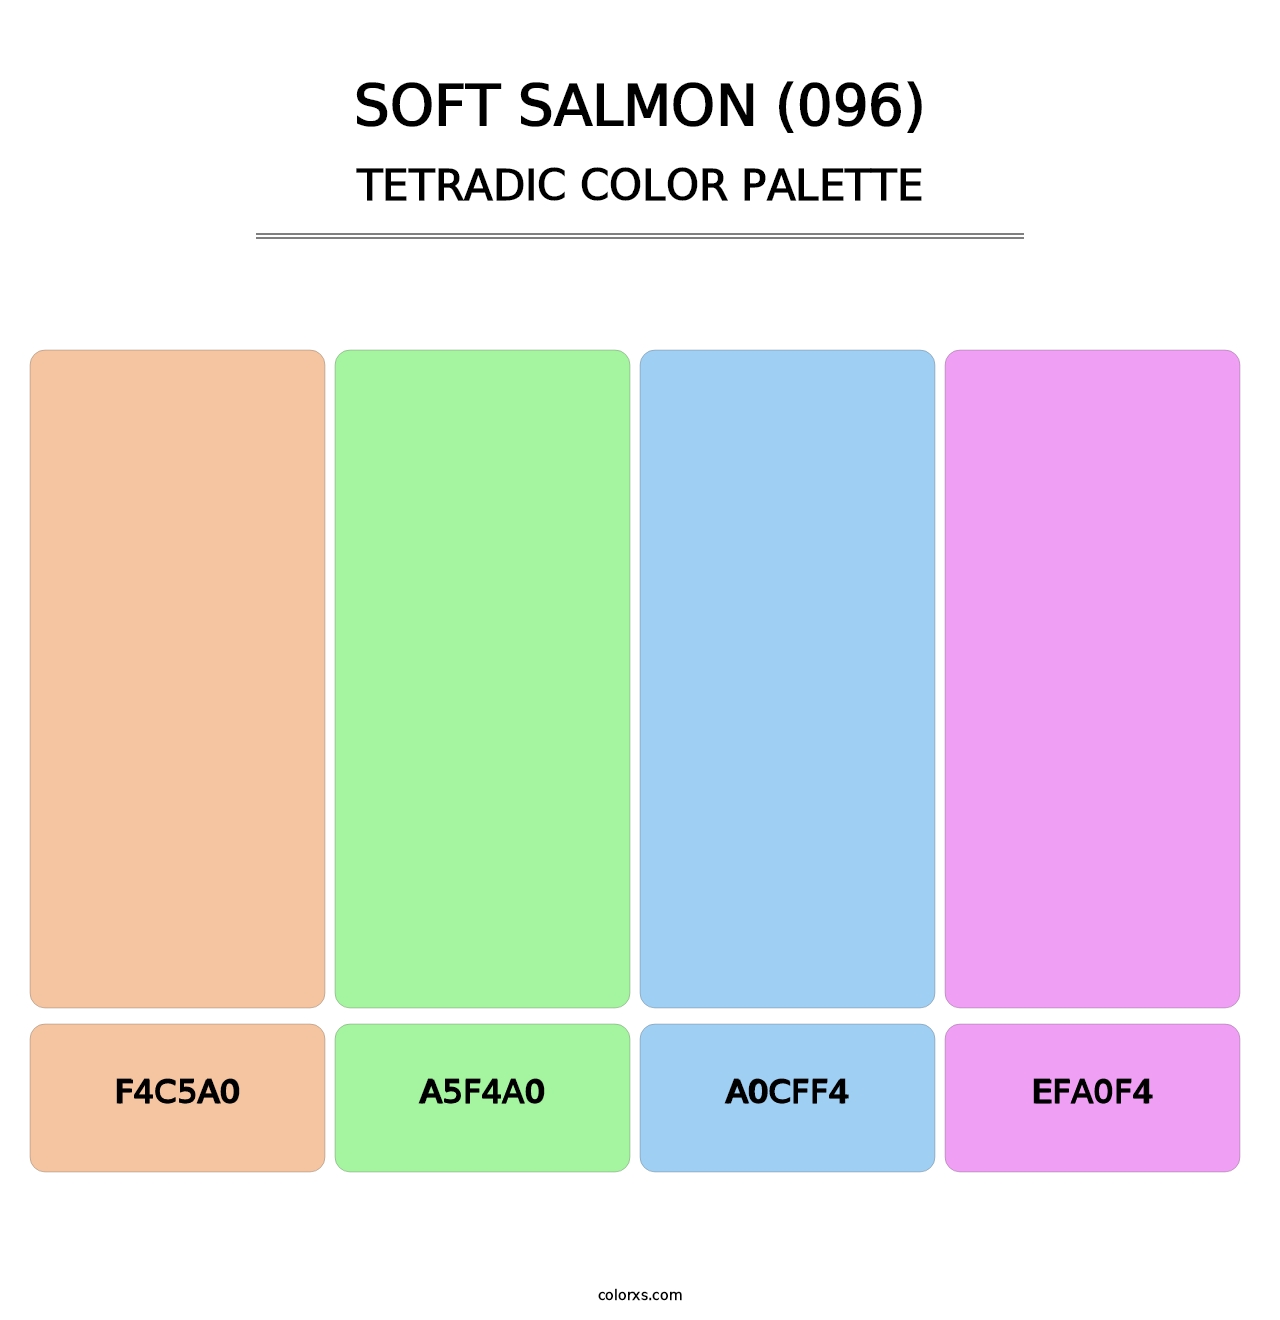 Soft Salmon (096) - Tetradic Color Palette